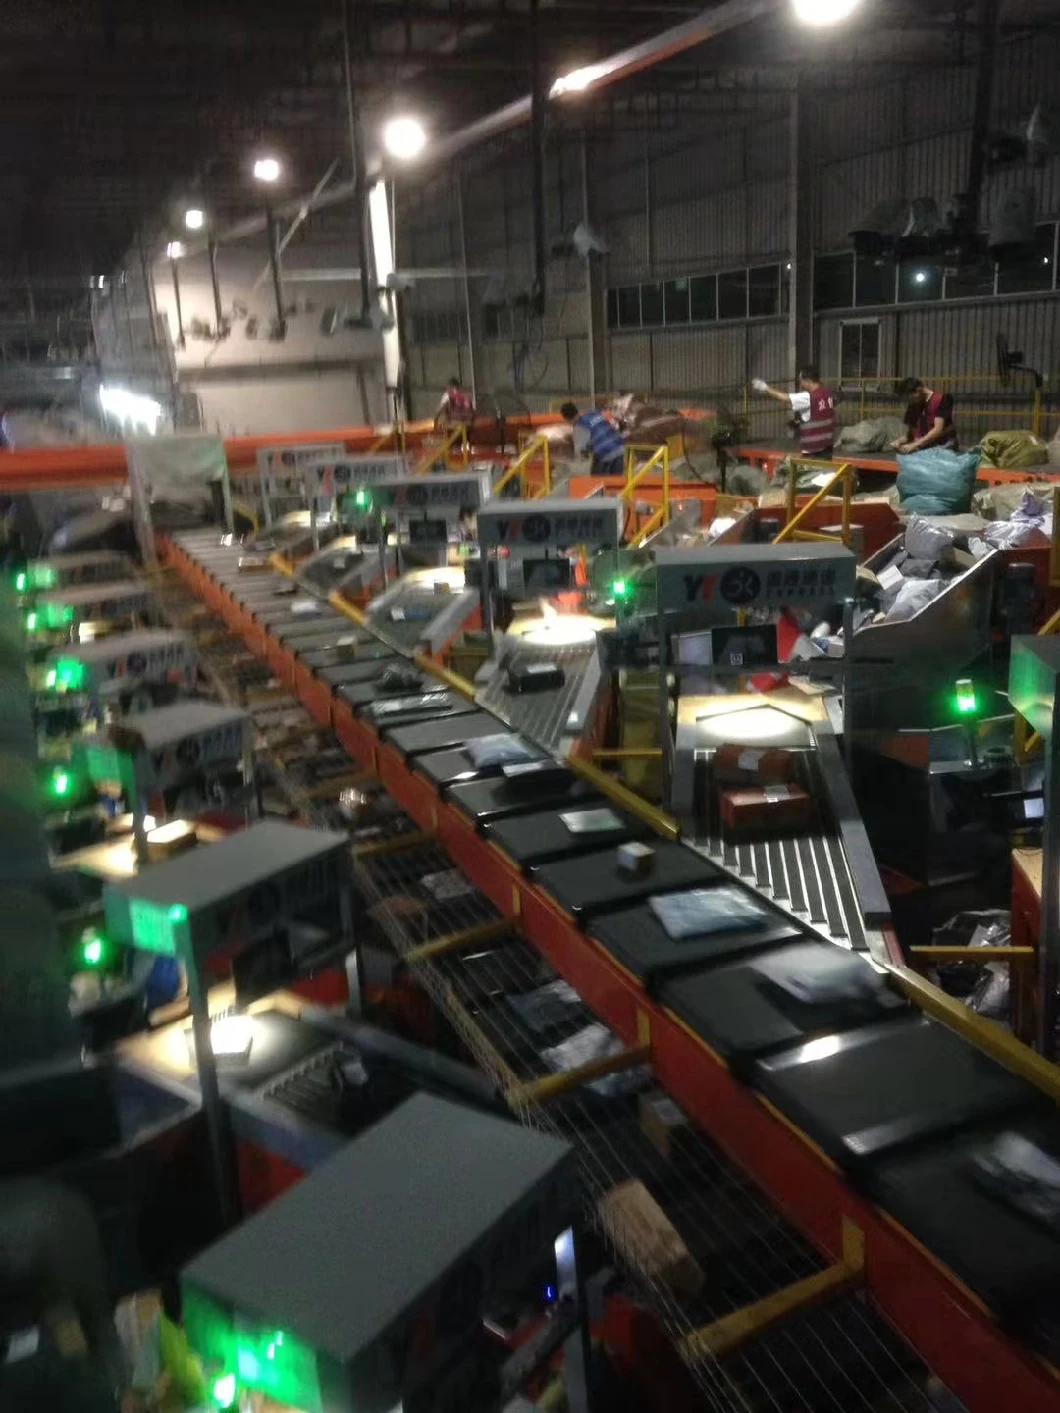 High Speed Conveyor Cross Belt Sorting Machine for Express Parcels